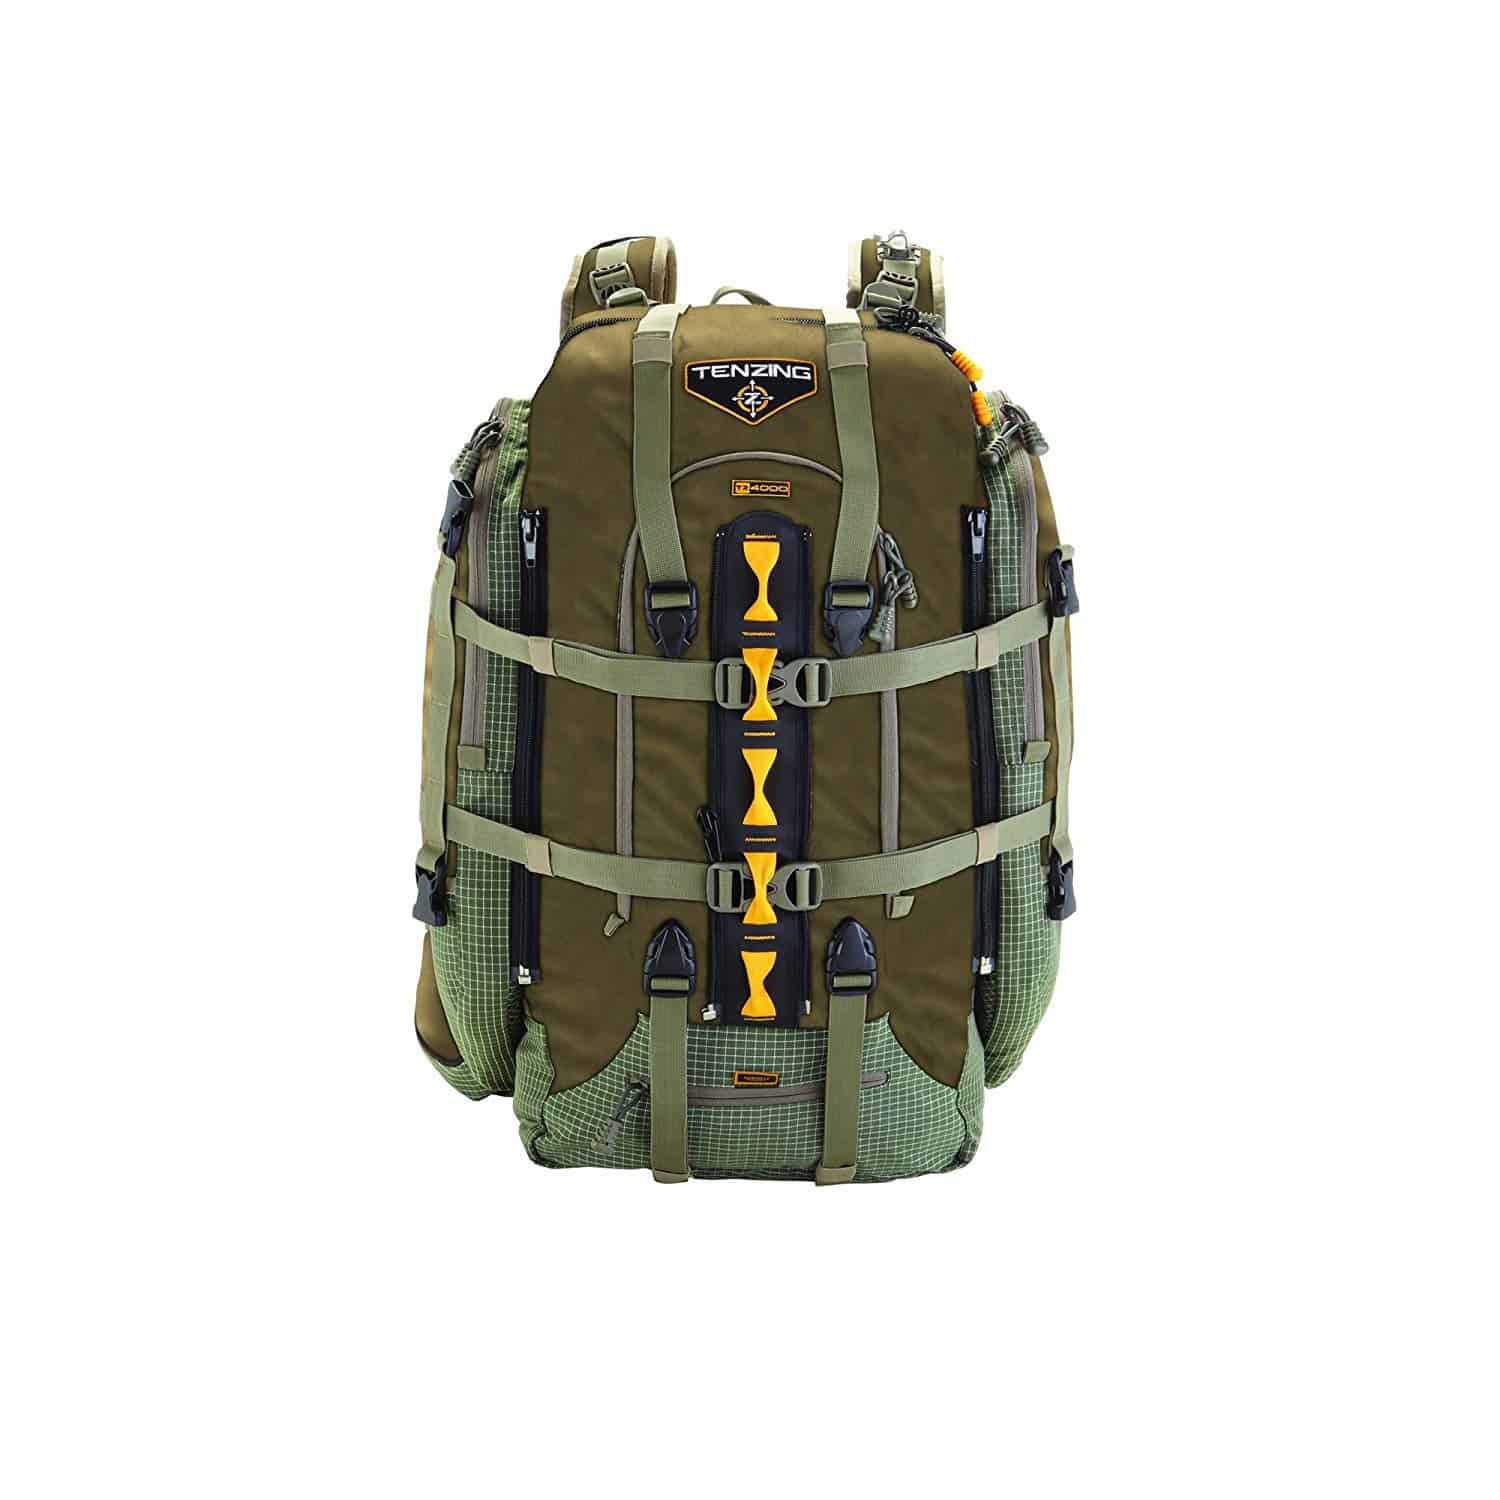 Tenzin TZ 4000 Hunting Backpack